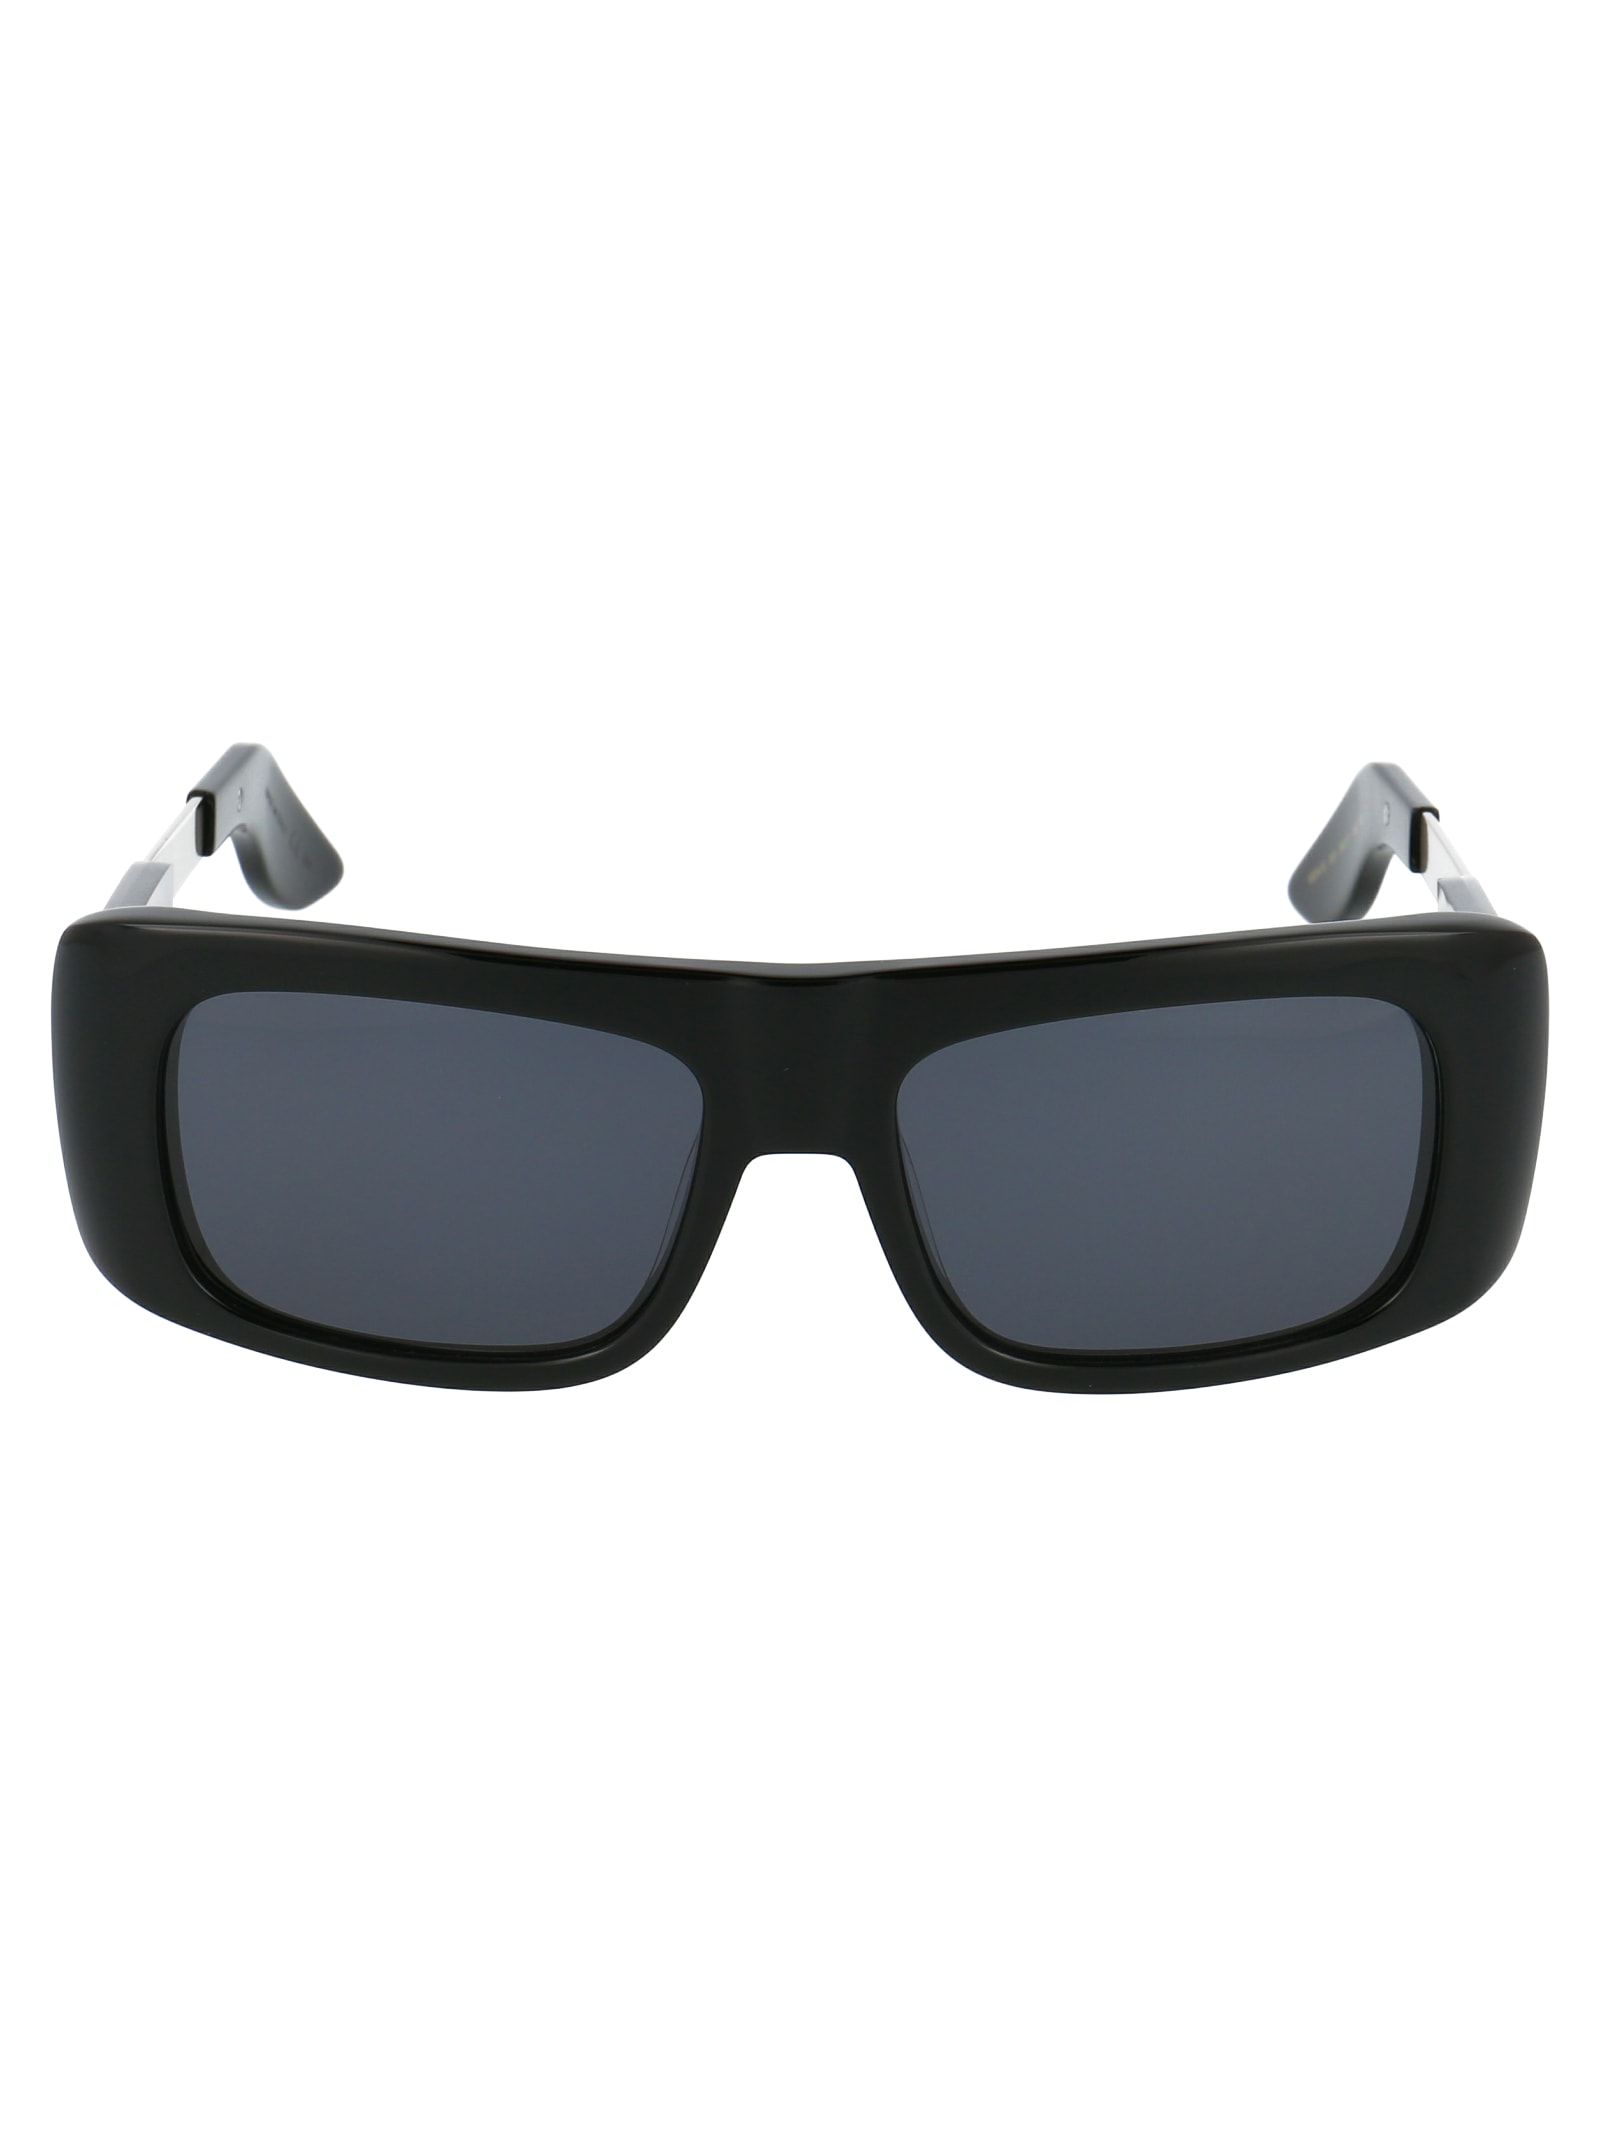 Marni Eyewear Me641s Sunglasses